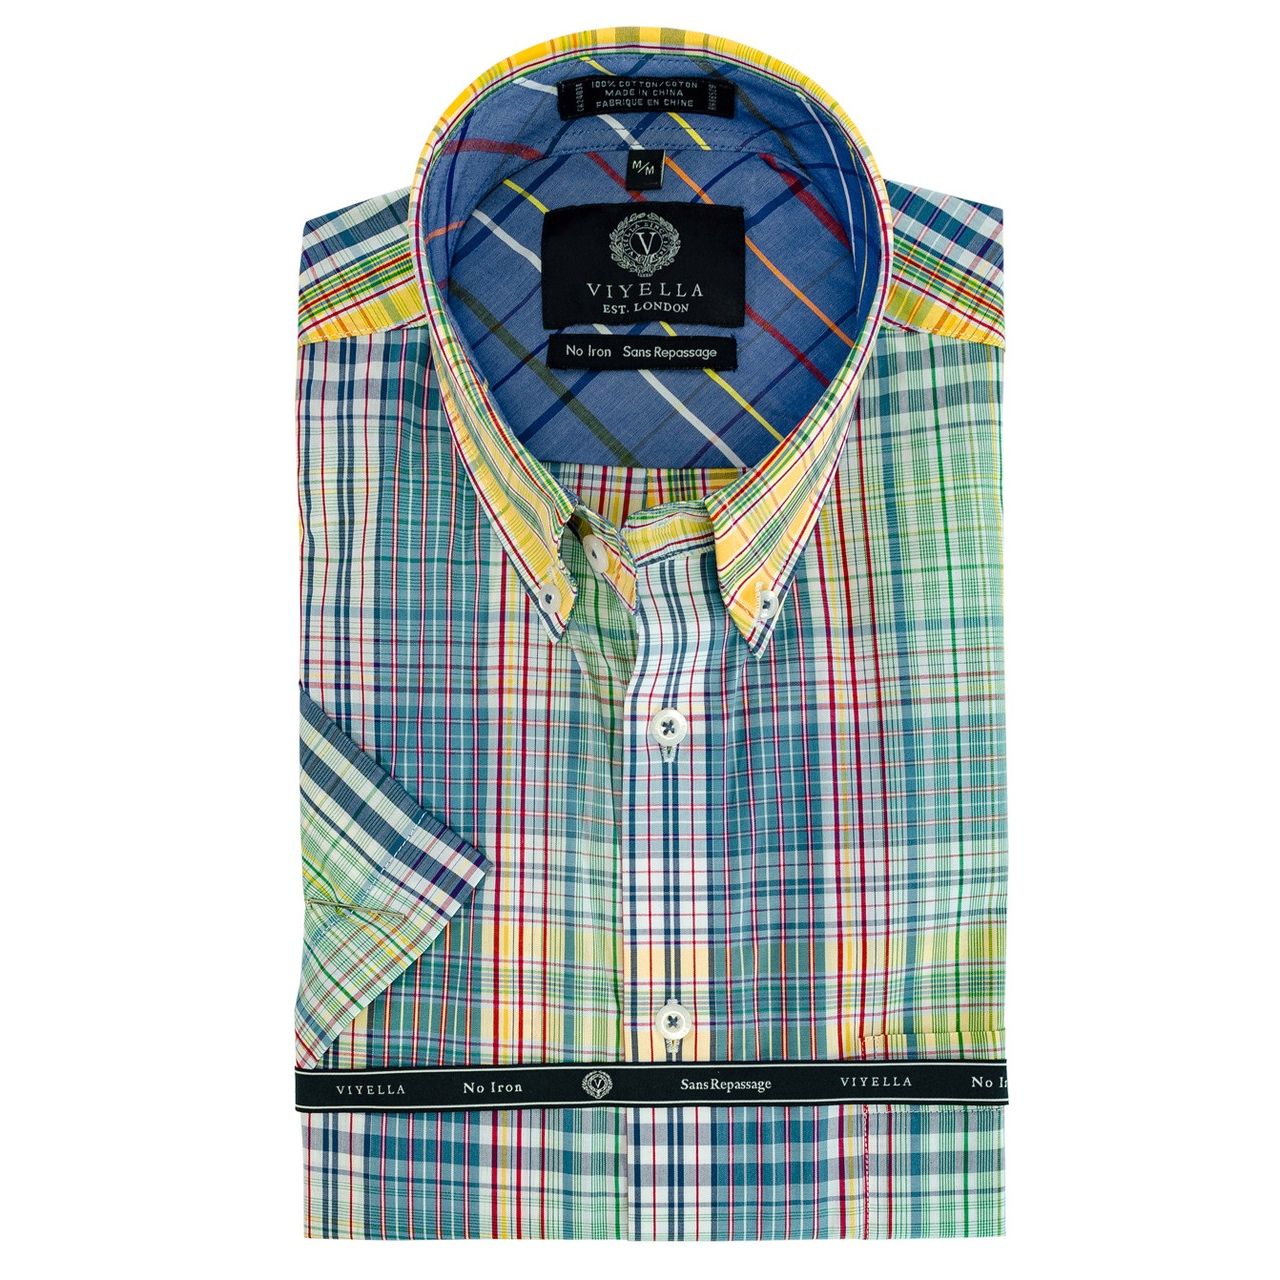 Multi Blue, Green, and Lemon Plaid Cotton Wrinkle-Free Button-Down Shirt by Viyella